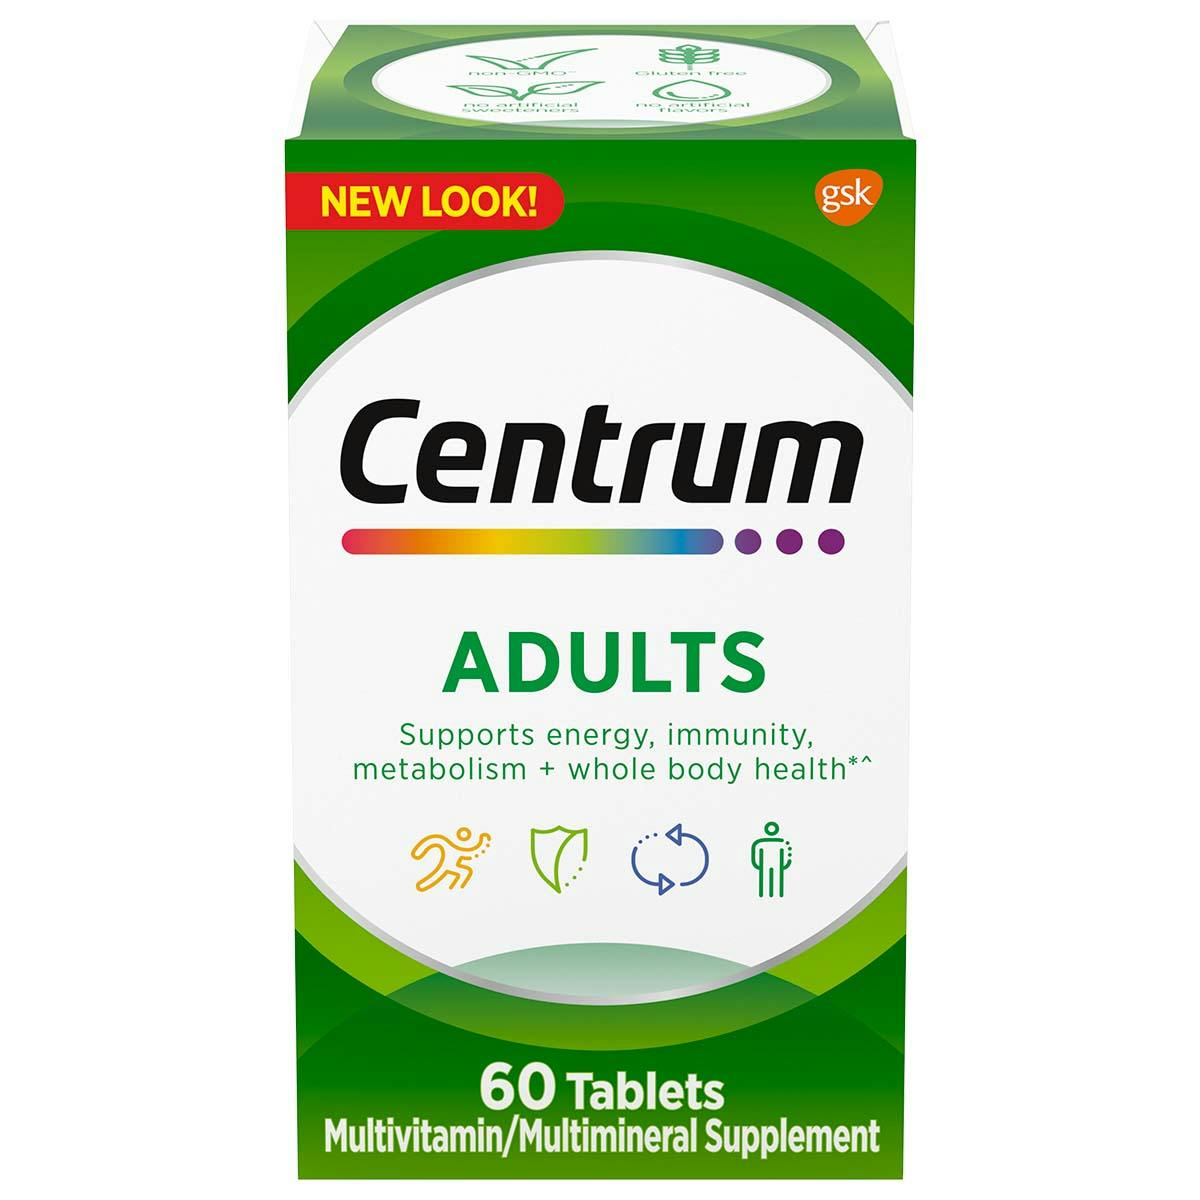 Box of Centrum Adults Multivitamins